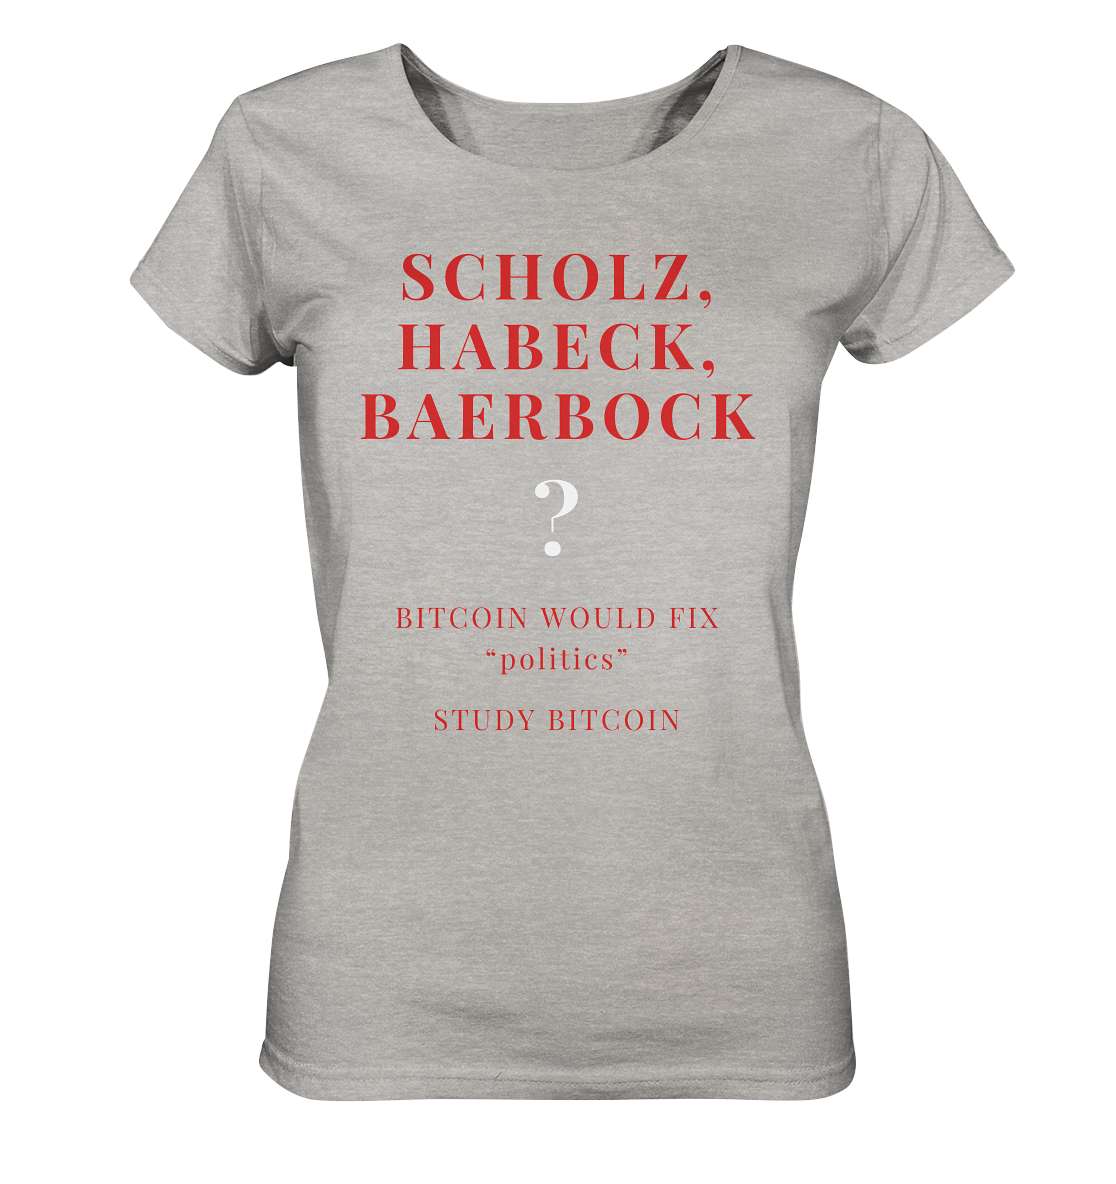 SCHOLZ, HABECK, BAERBOCK ? BITCOIN WOULD FIX "politics" - STUDY BITCOIN (Ladies Collection 21% Rabatt bis zum Halving 2024)   - Ladies Organic Shirt (meliert)